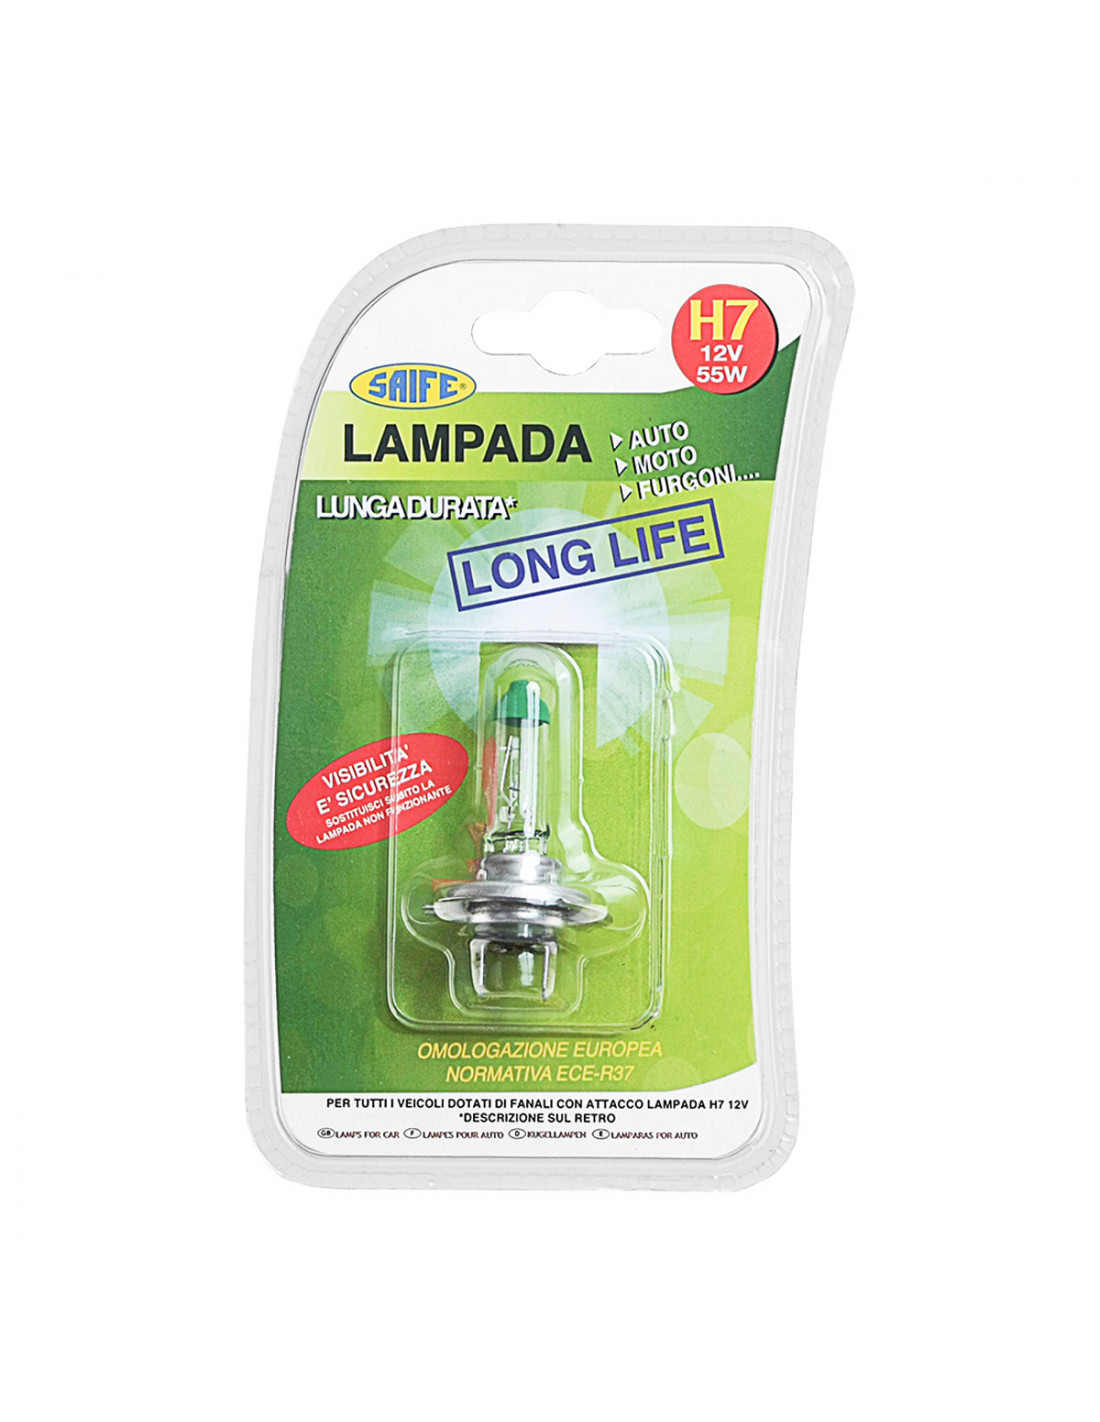 Lampada H7 Long Life 12 V 55 W Saife